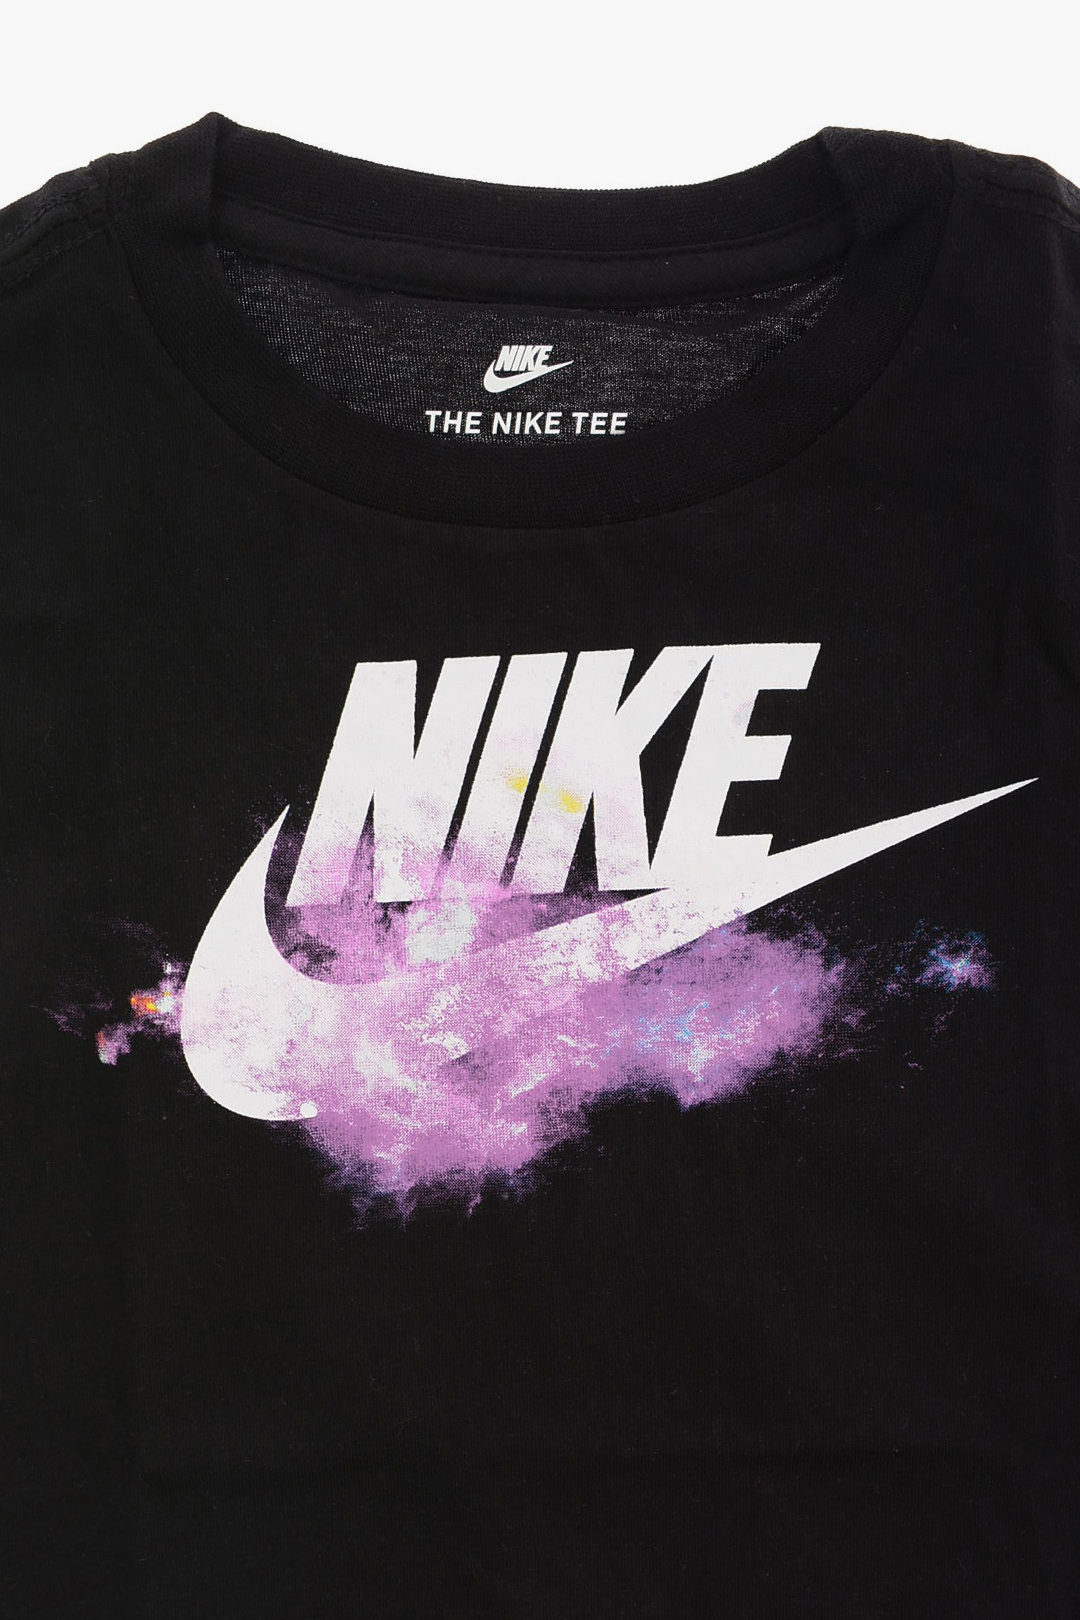 Nike on Galaxy